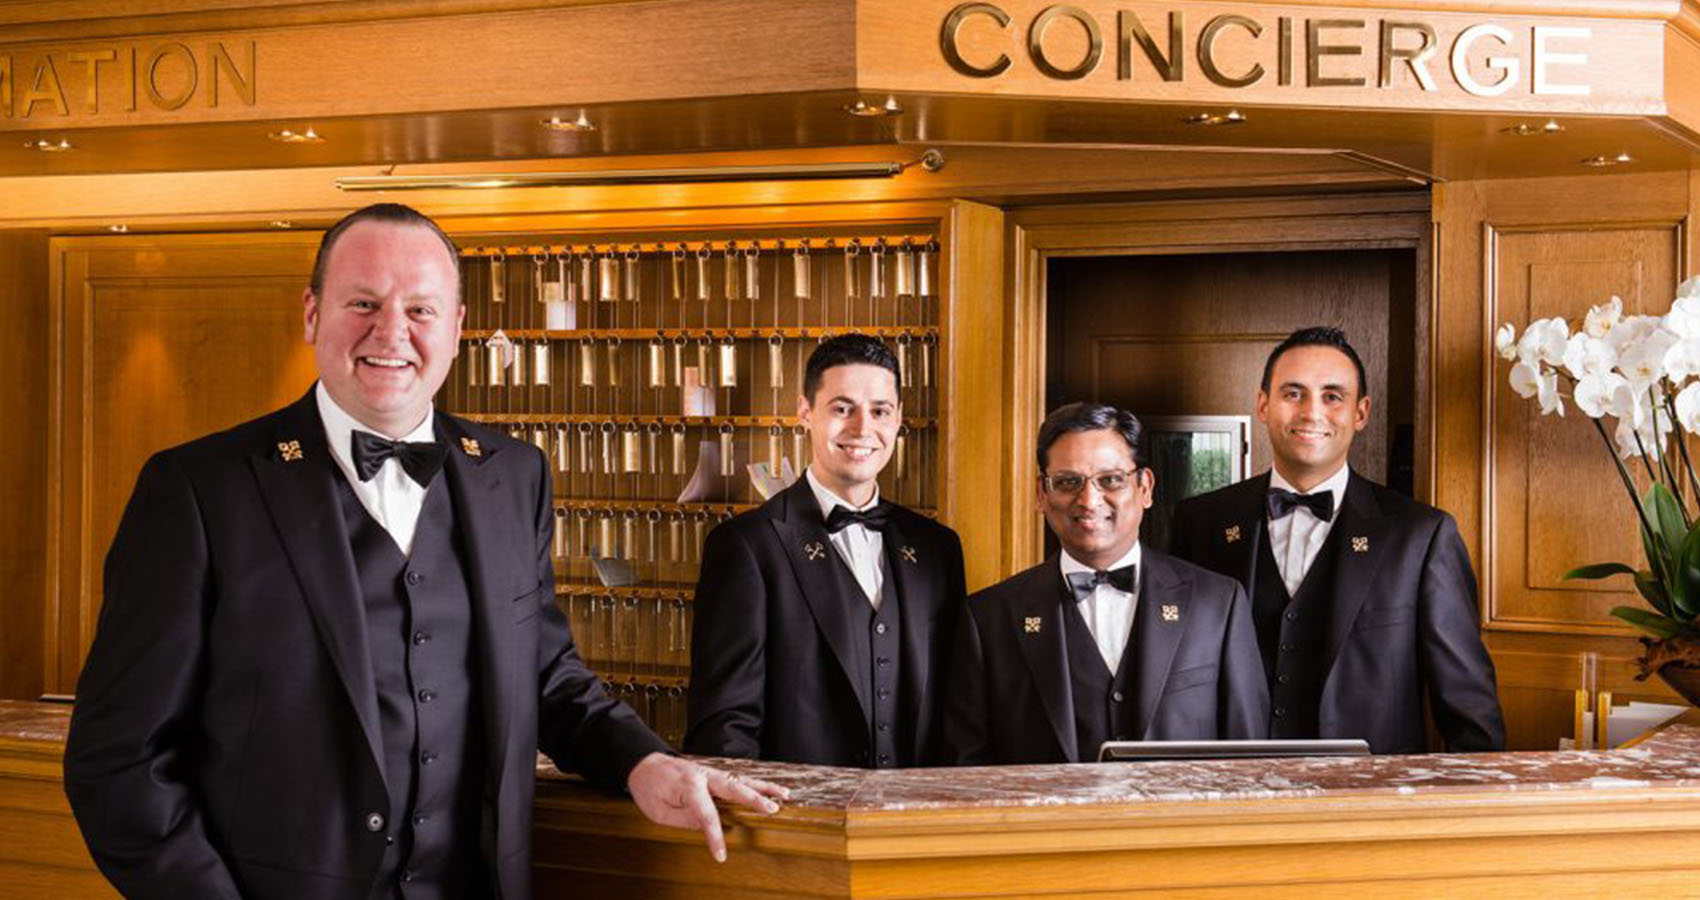 hotel secrets - concierge staff - Concierge Iation 22